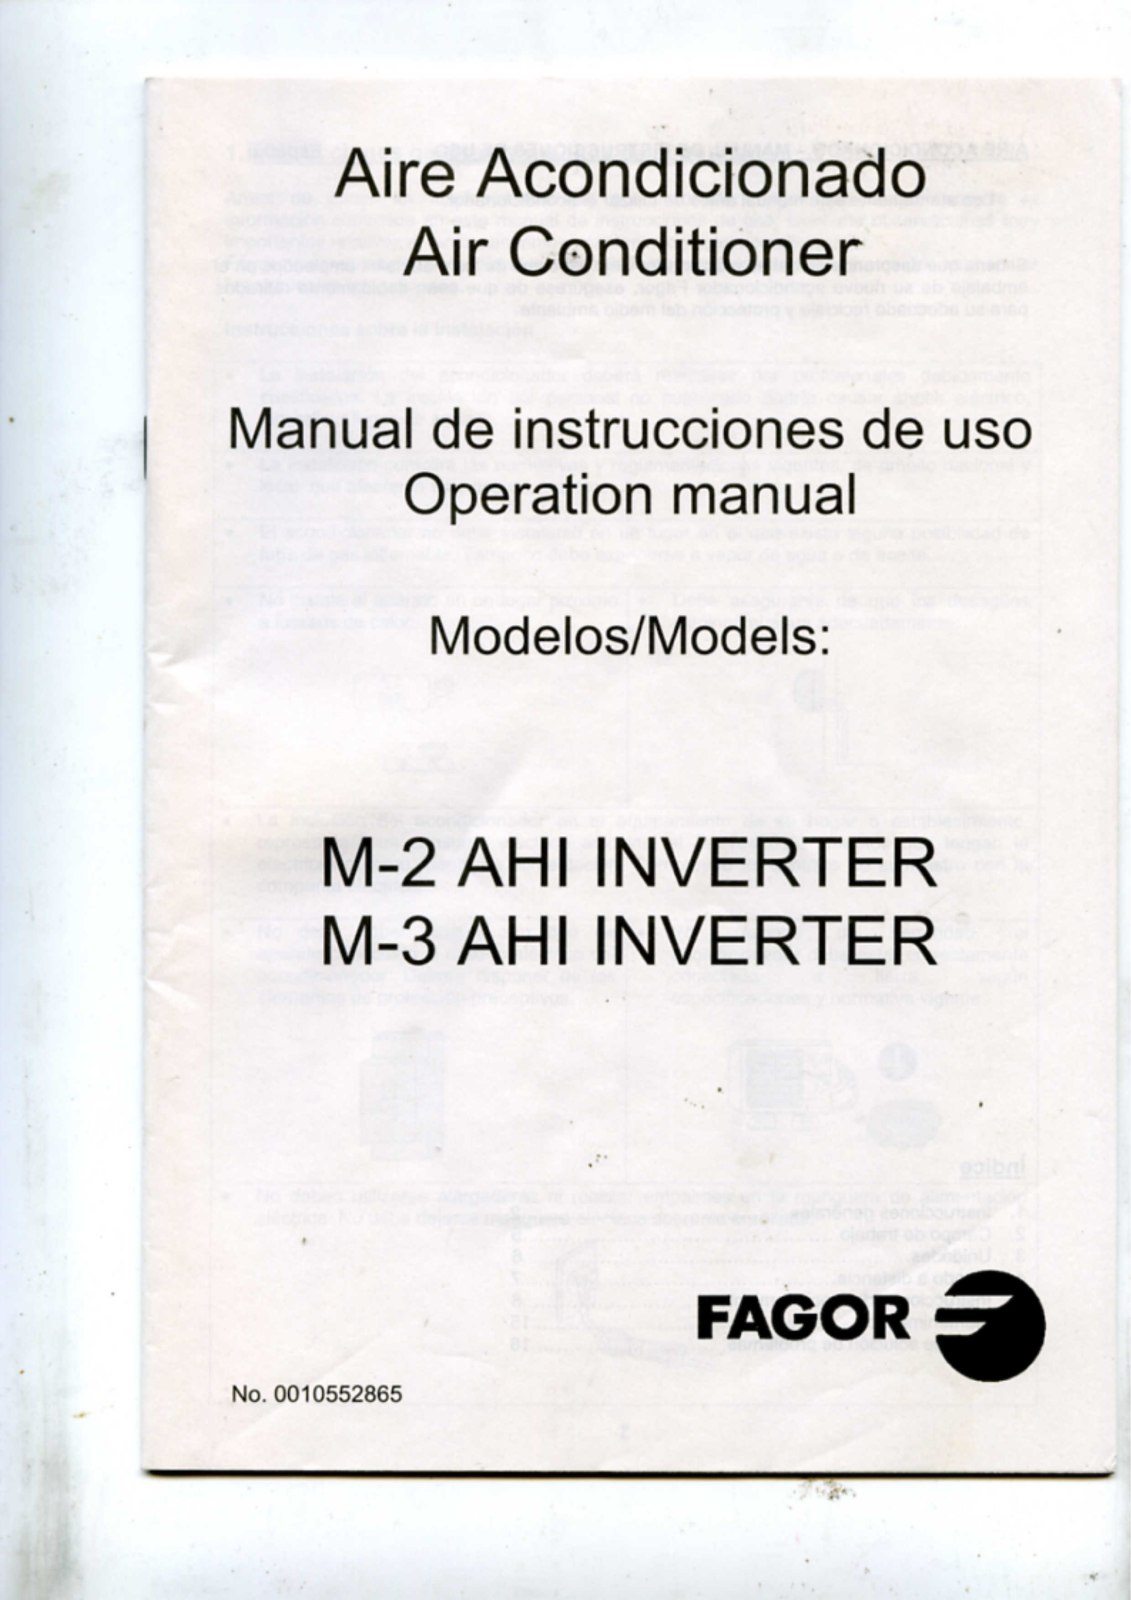 Fagor M-2, M-3 Service Manual